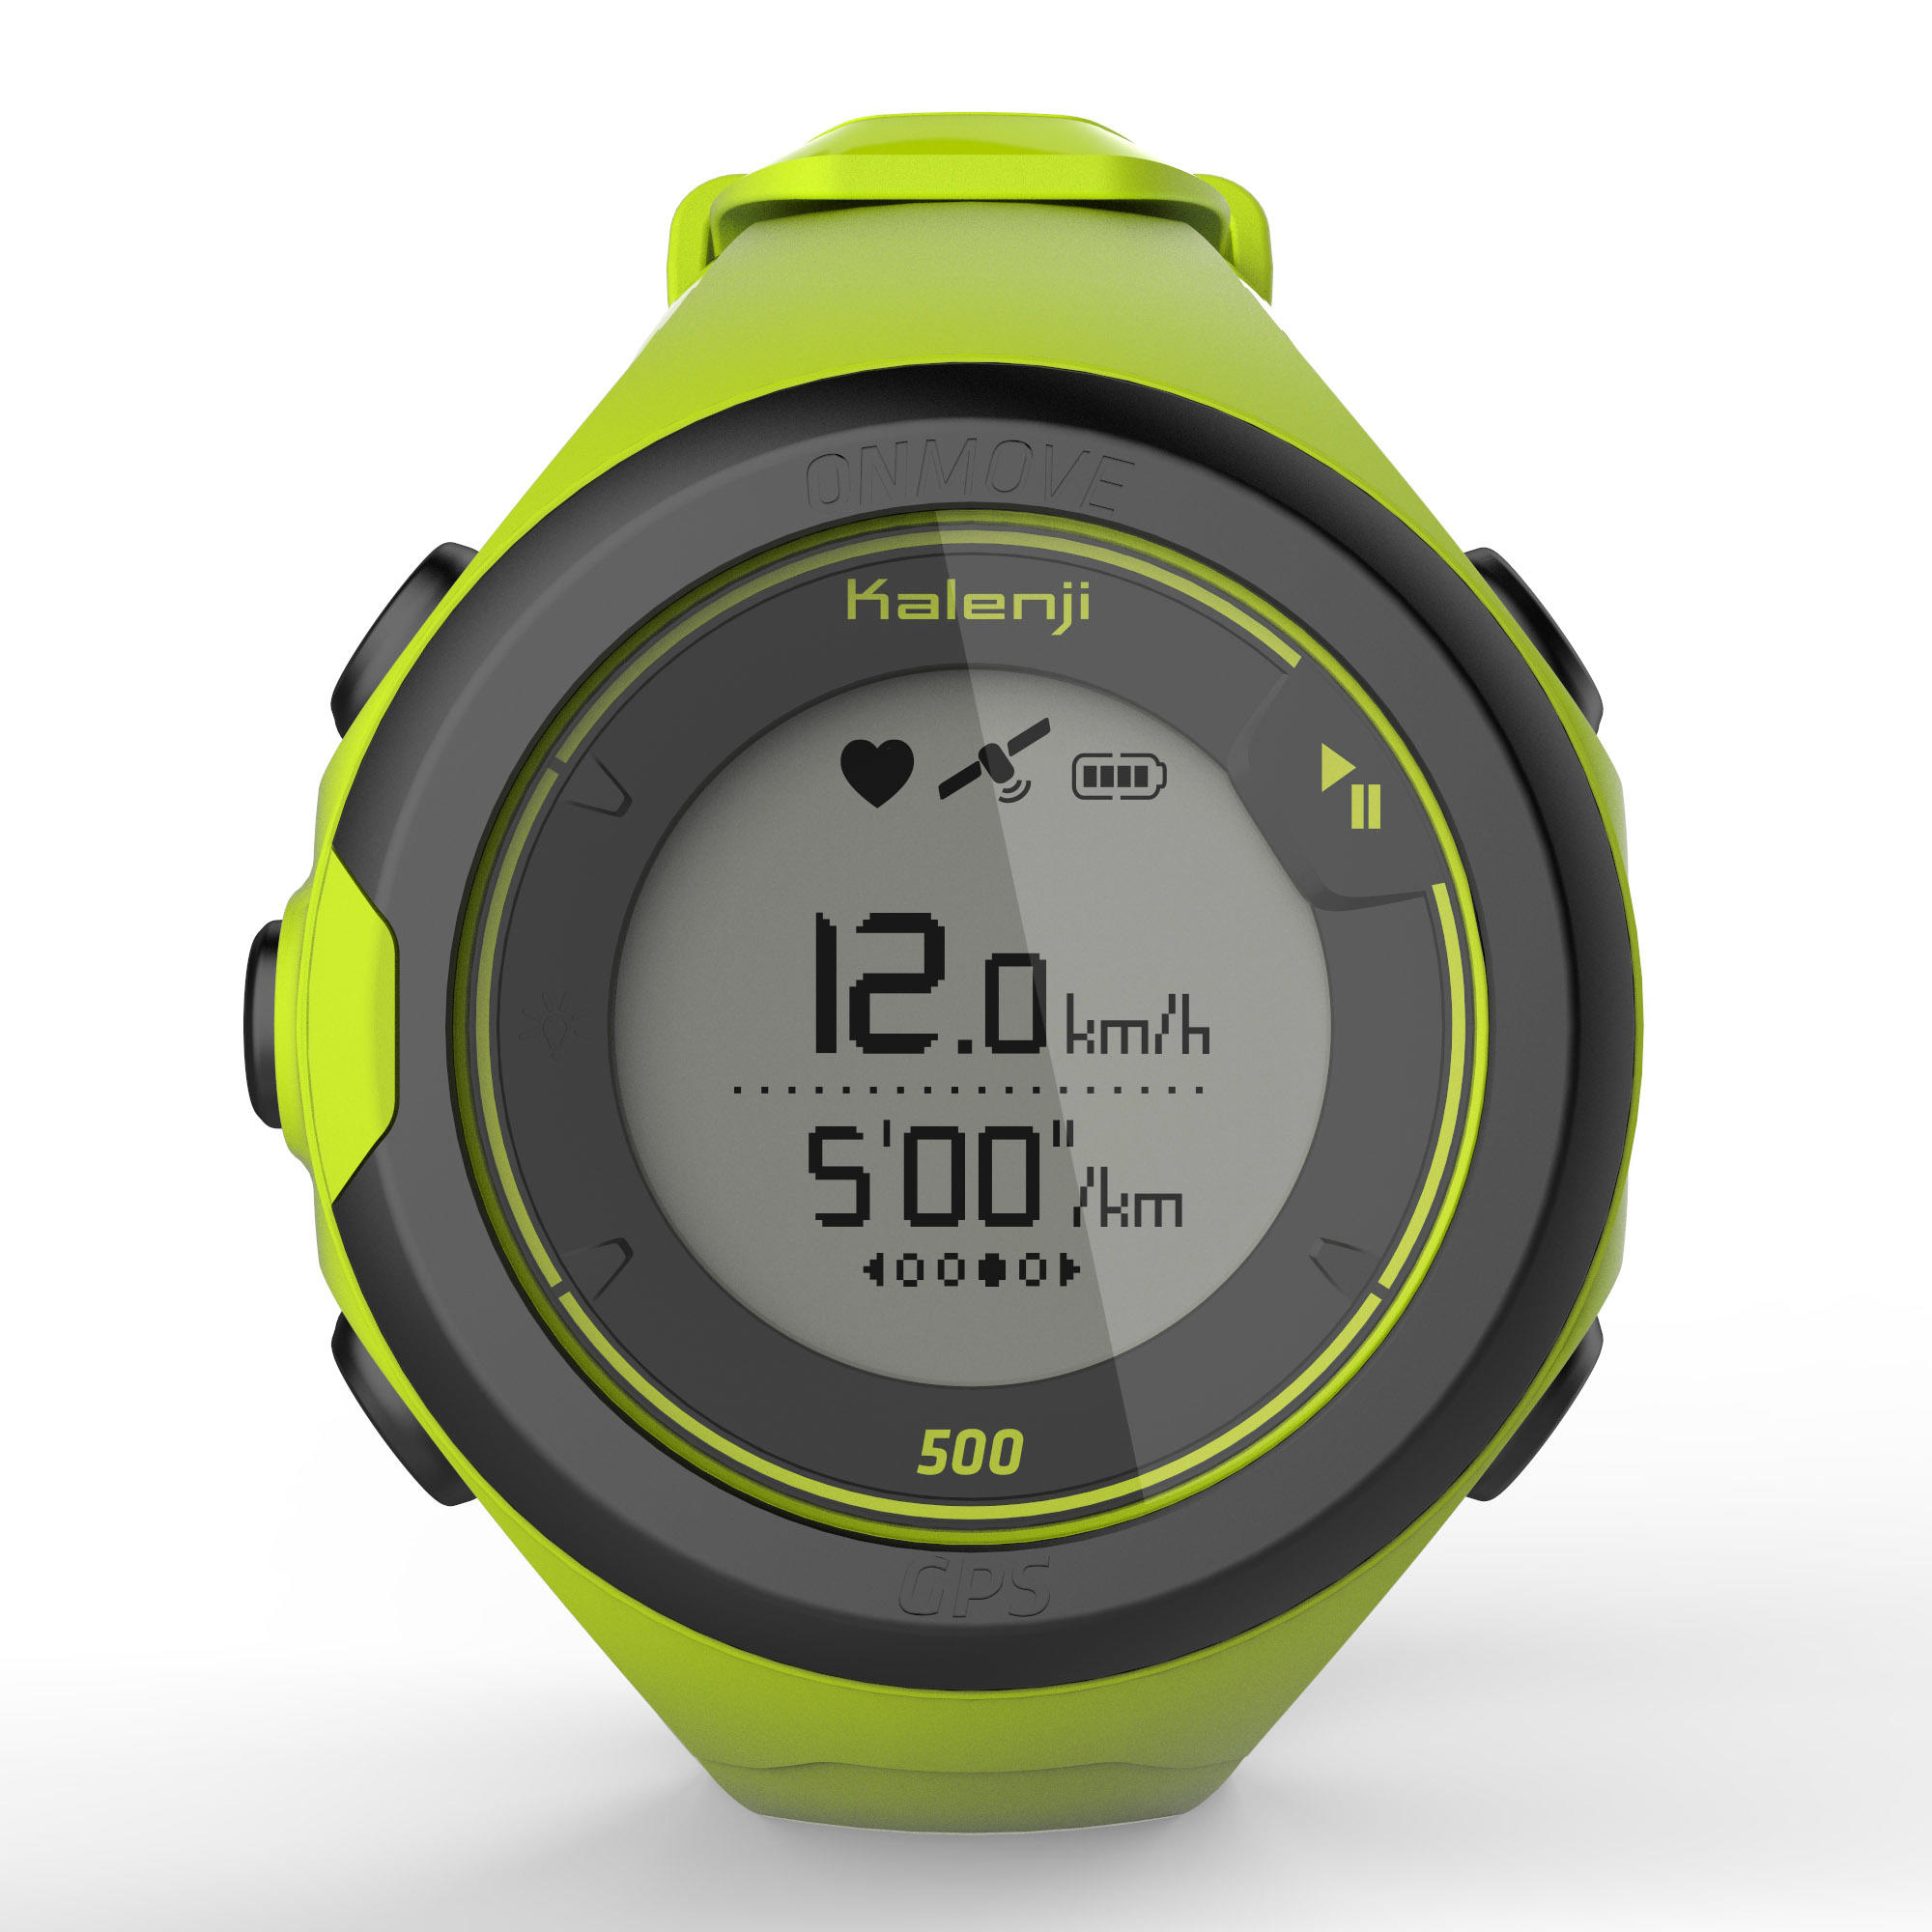 ONmove 500 GPS running watch and wrist heart rate monitor - yellow 8/17